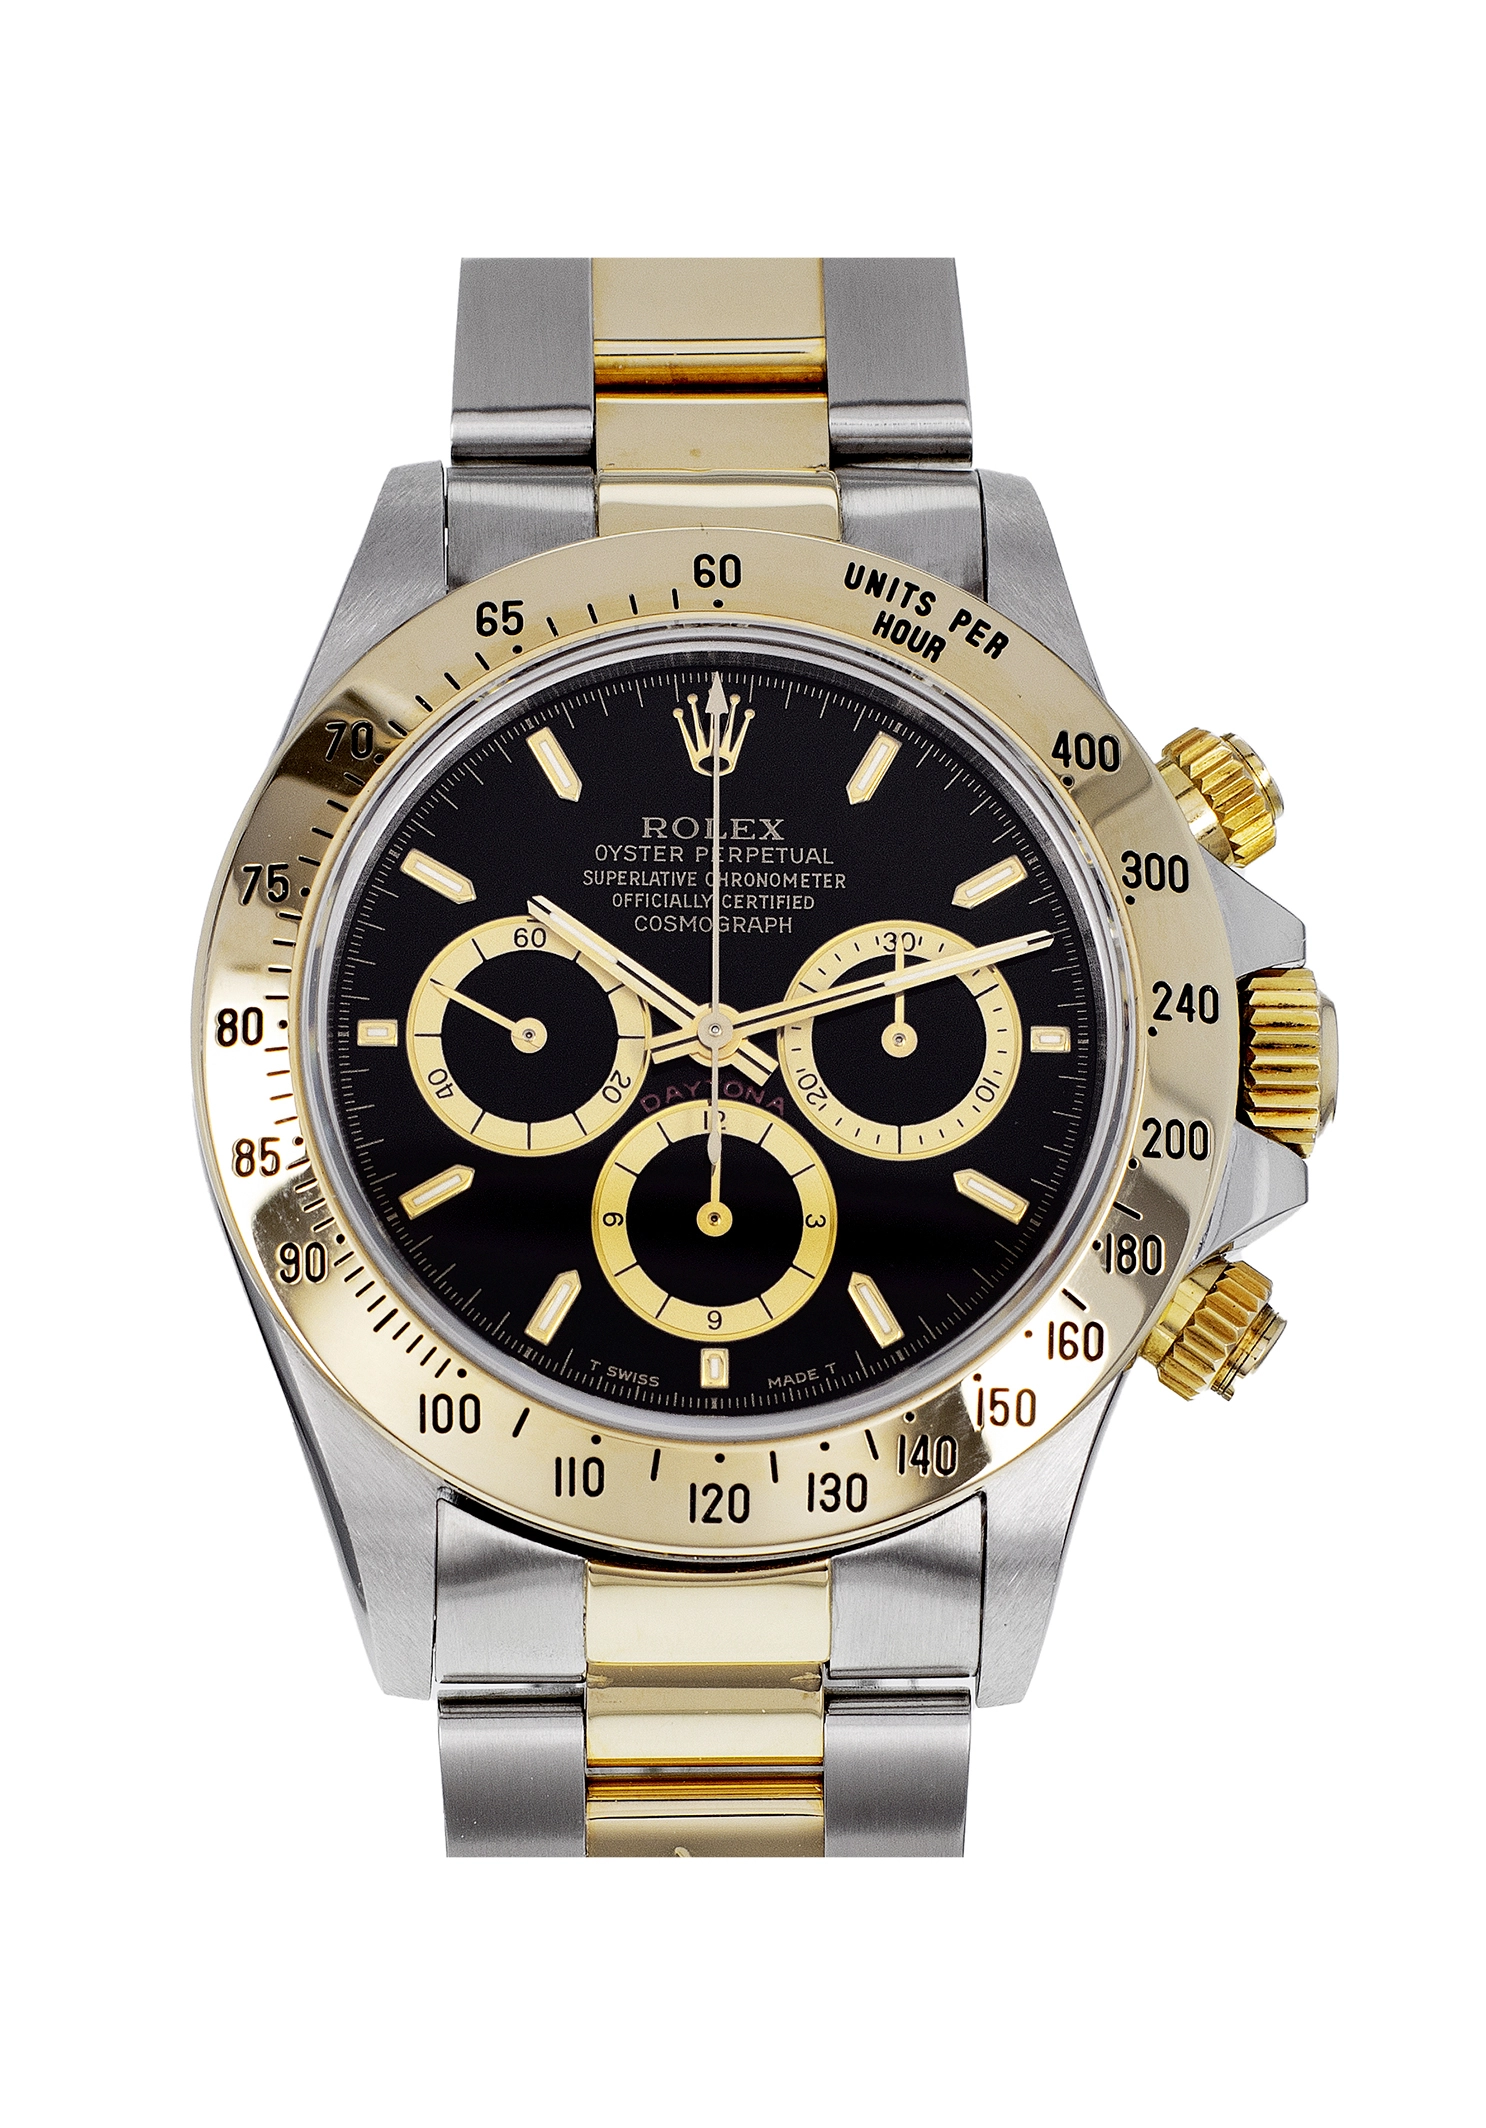 Daytona, reference 16523 Montre bracelet chronographe en acier et